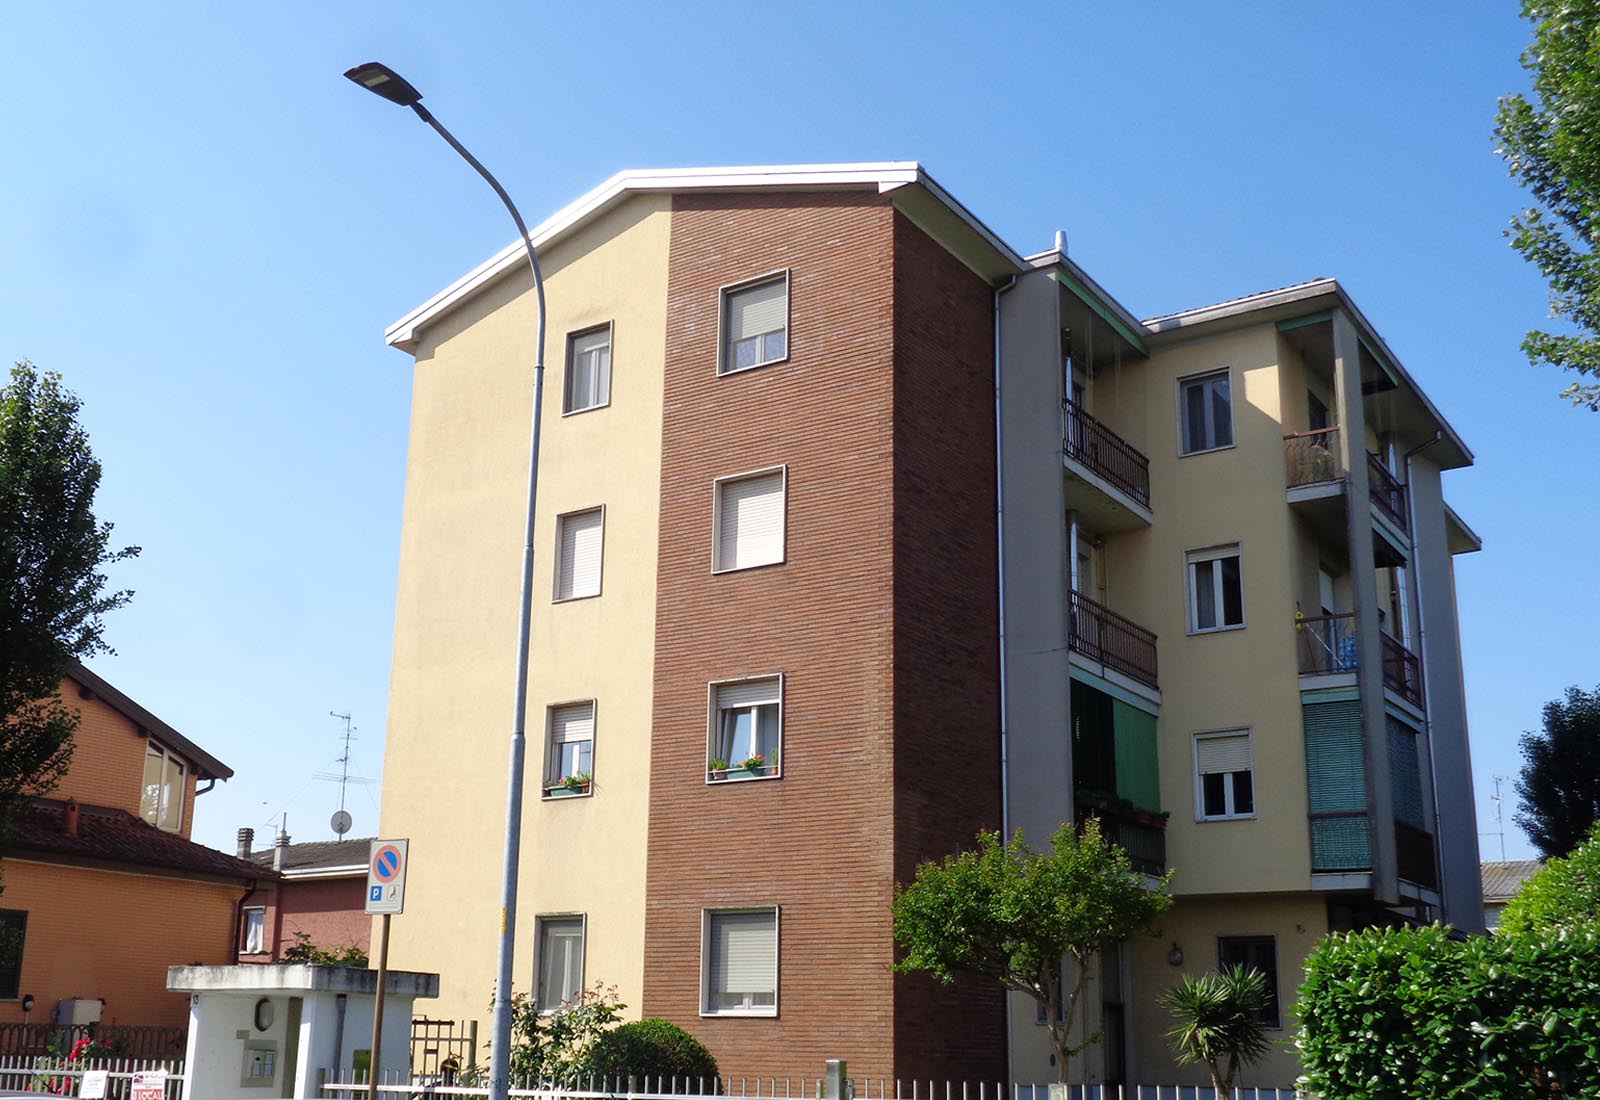 Apartment building in Tito Speri street in Rho - View